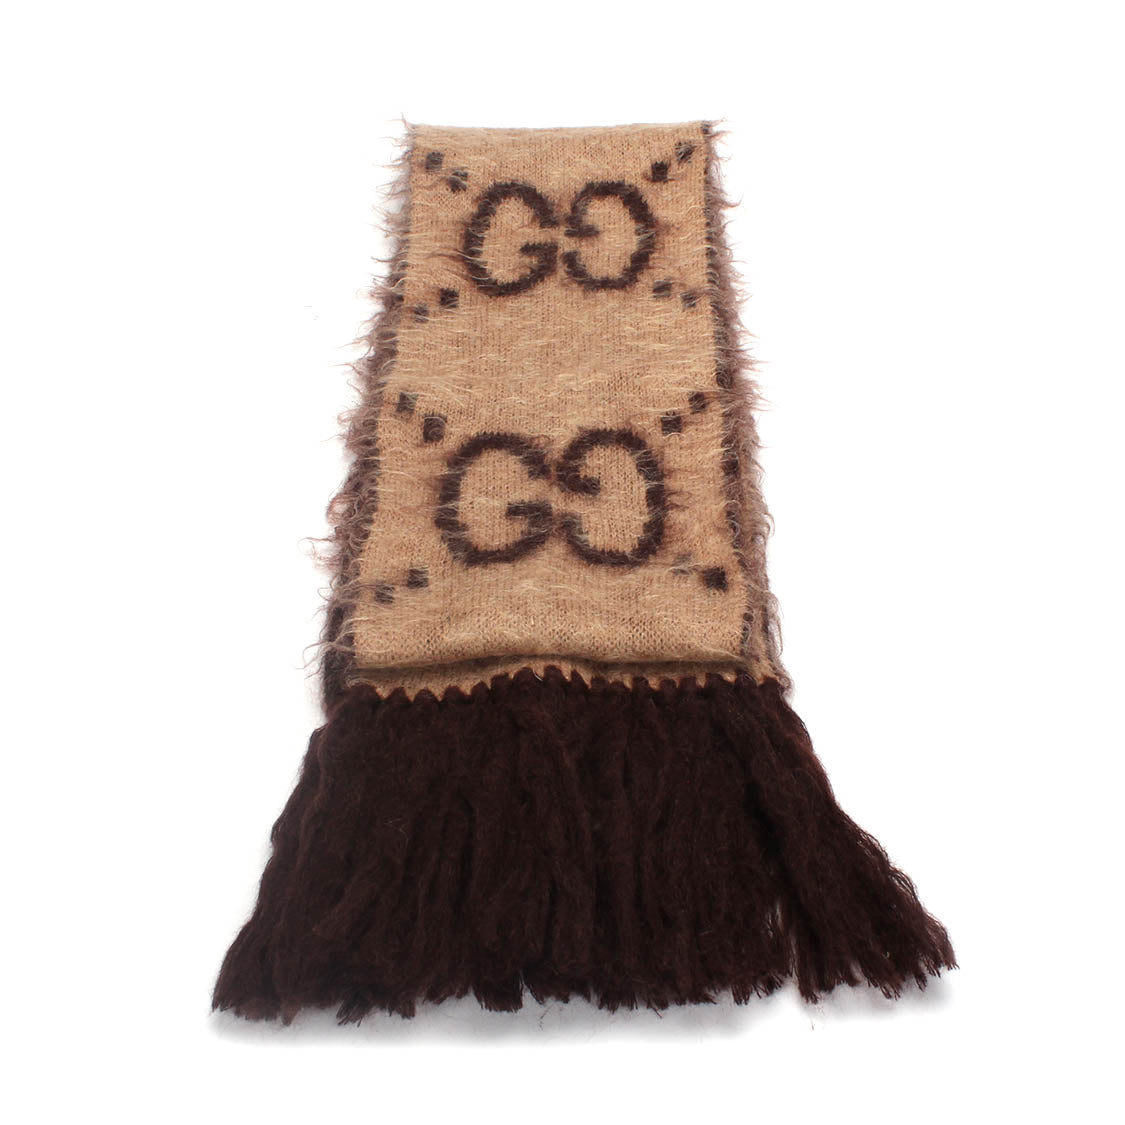 GG羊毛围巾